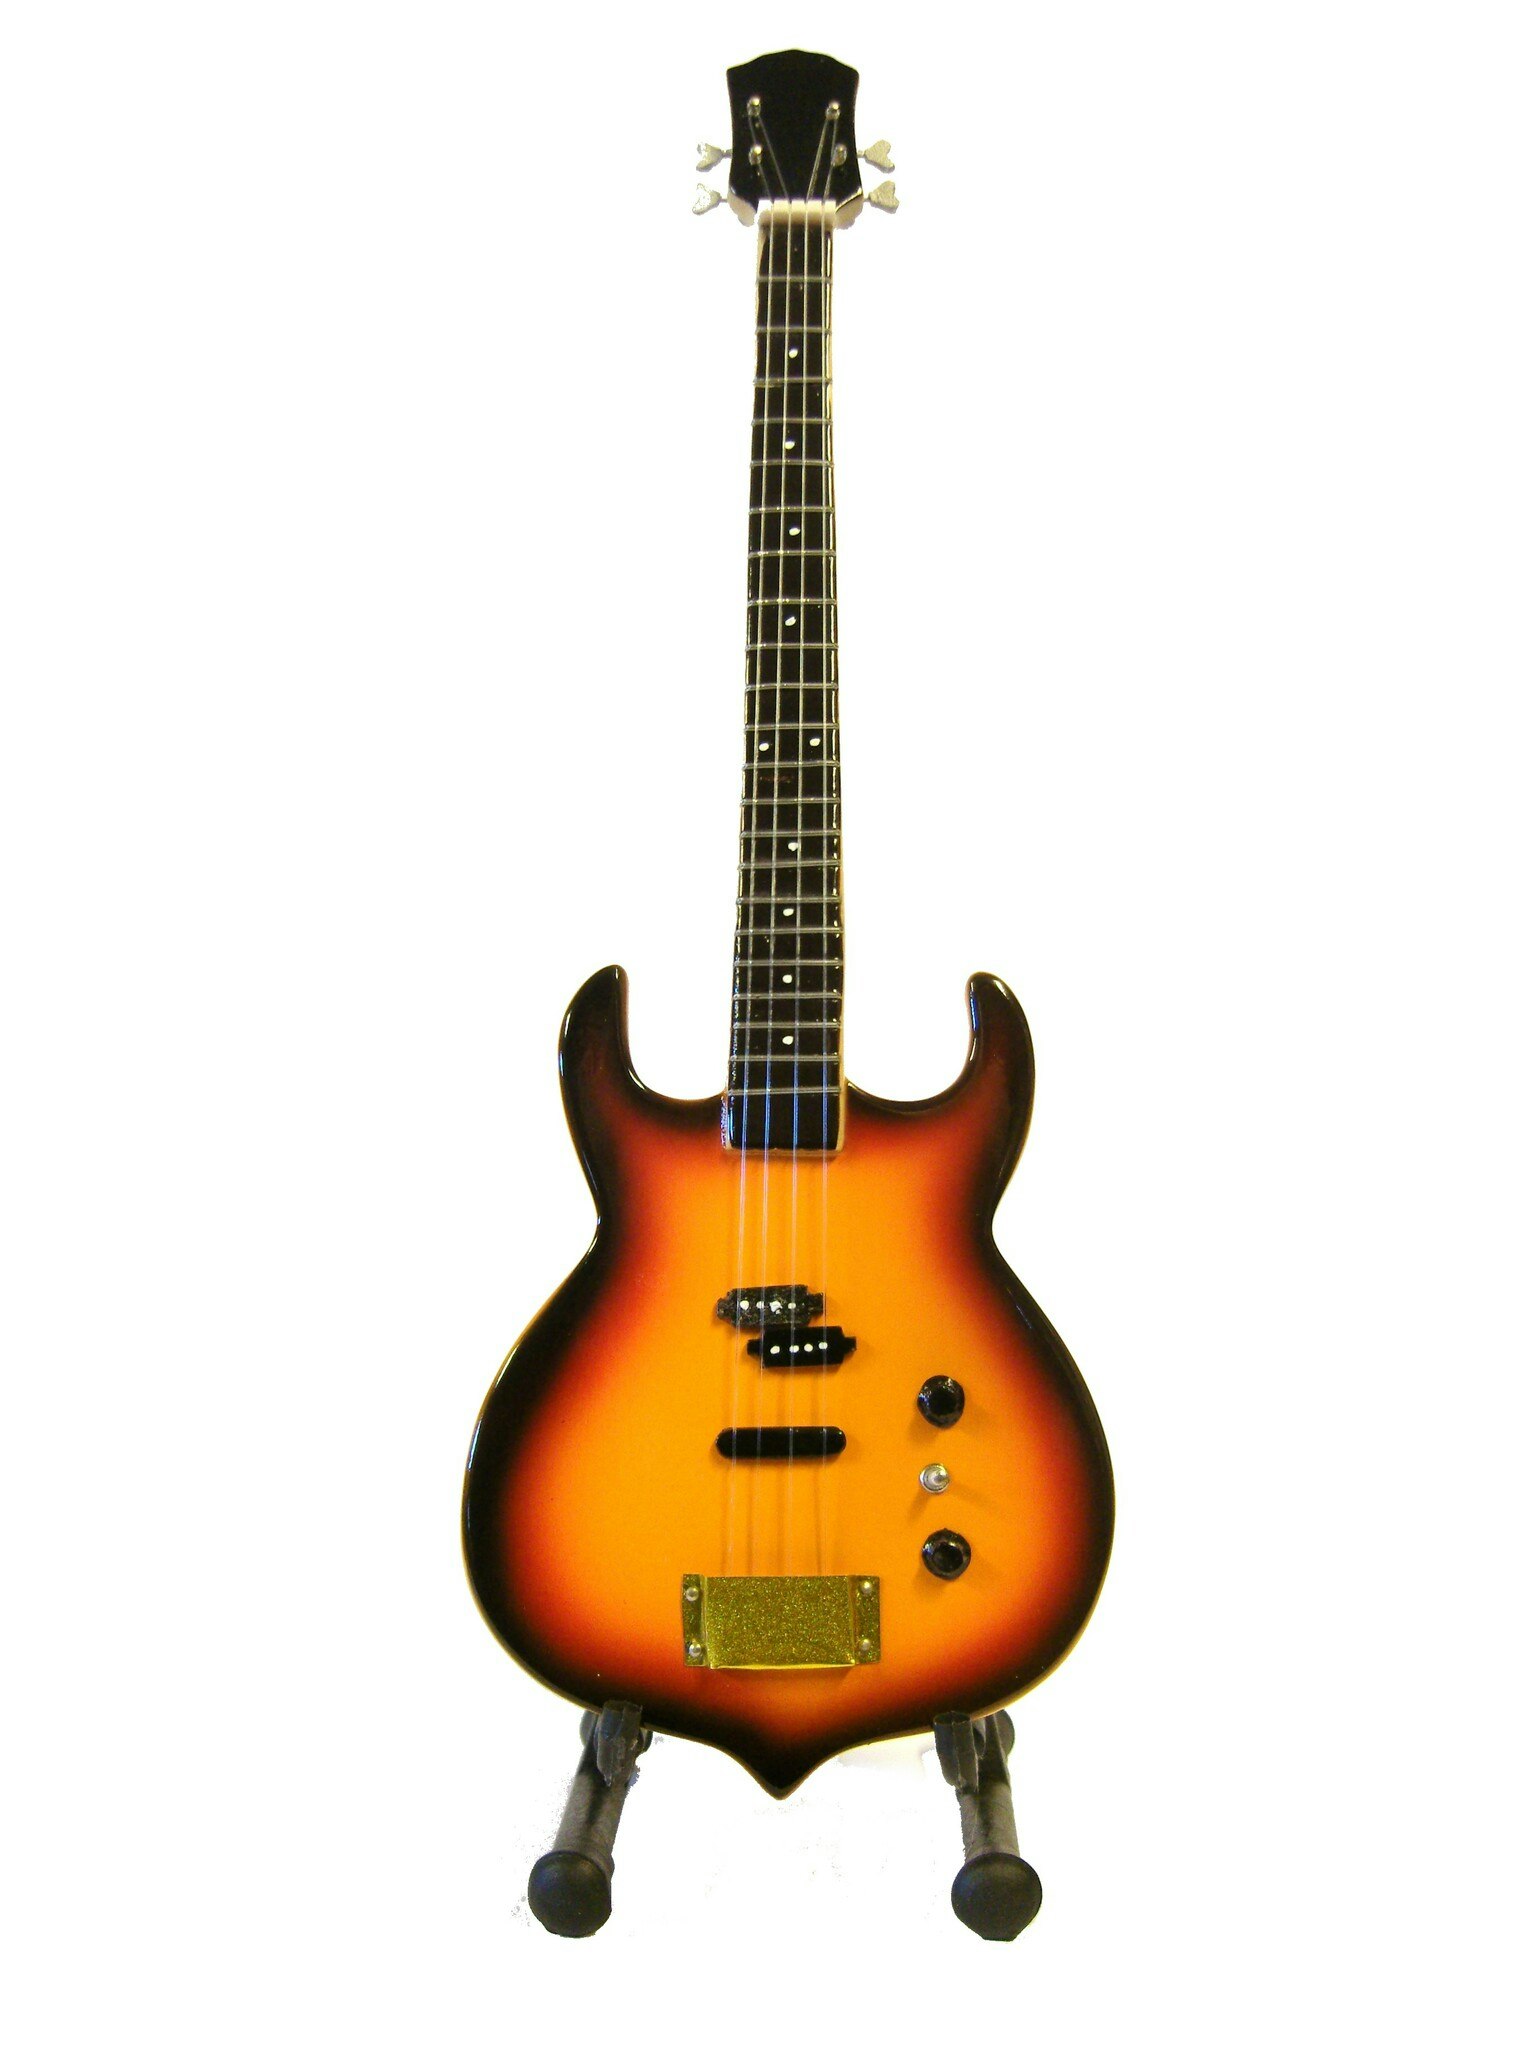 Gene Simmons sunburst bass replica.